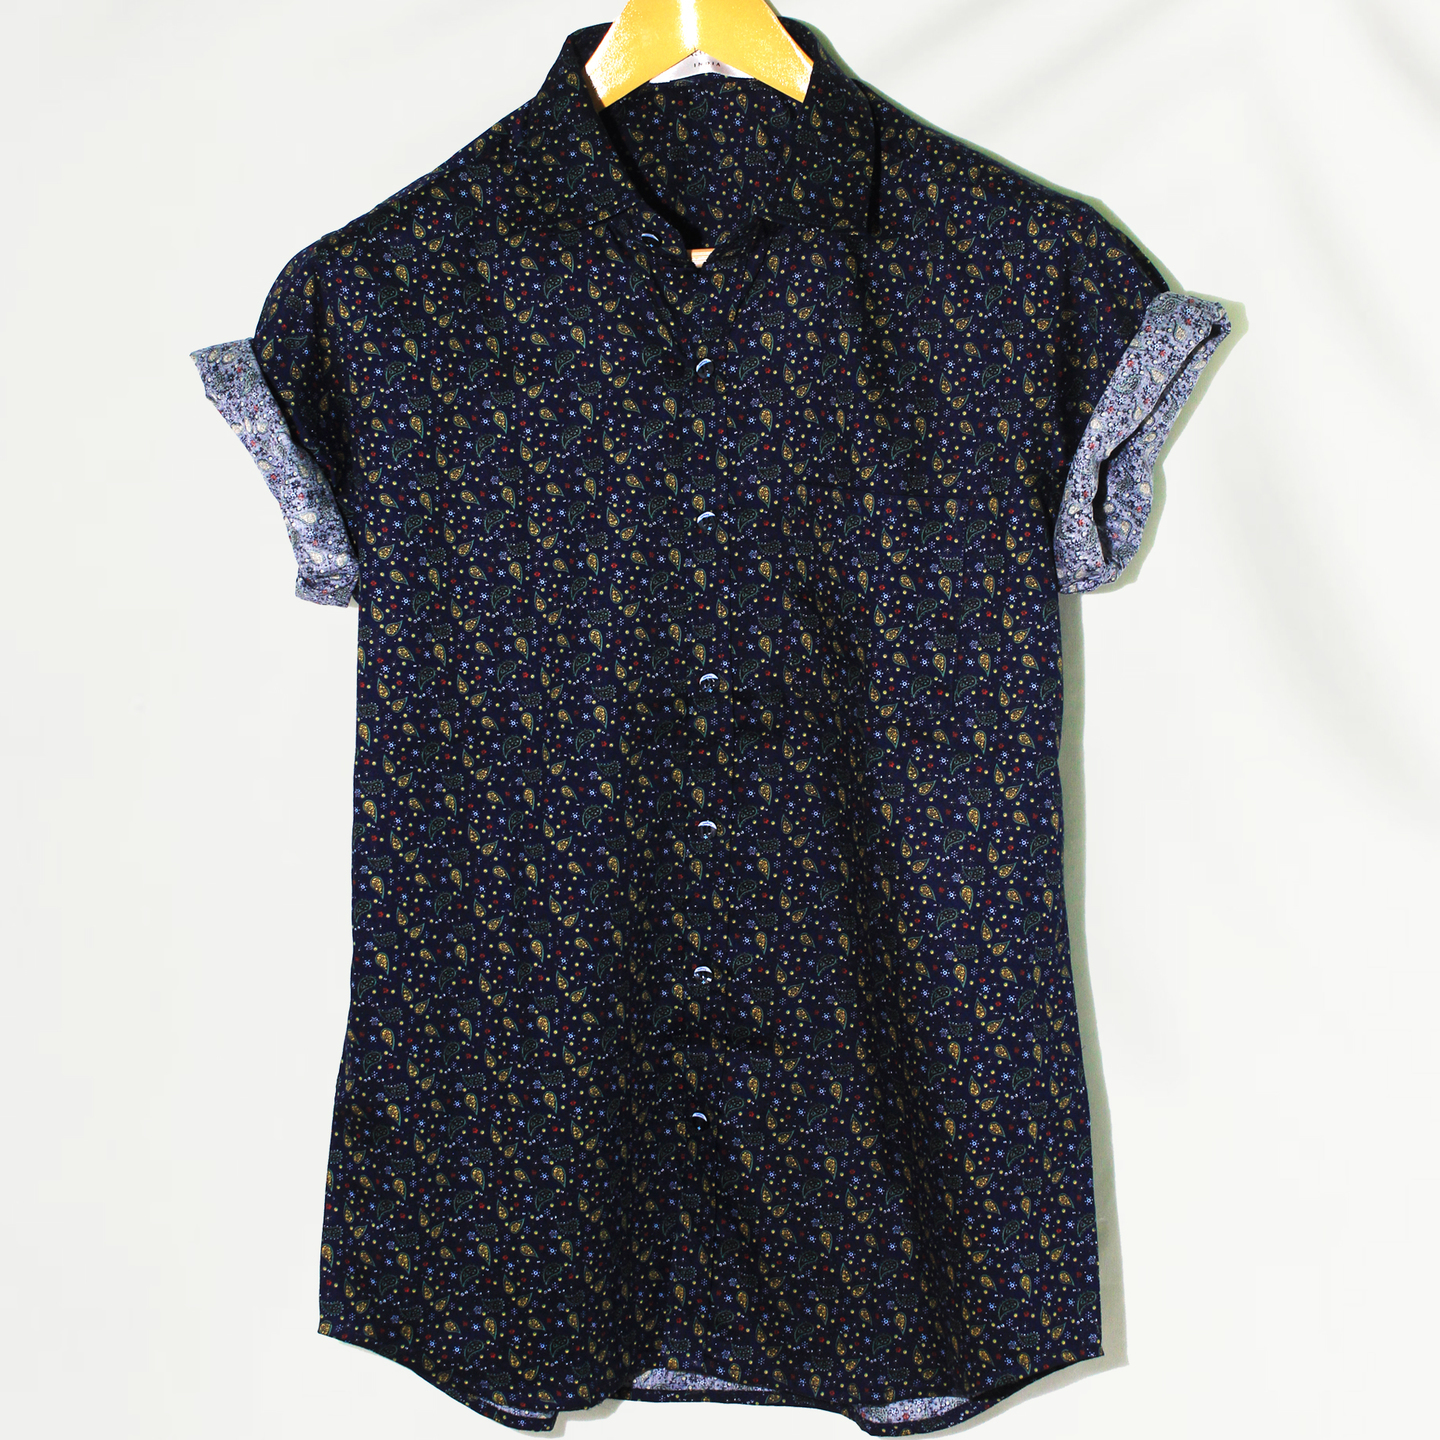 Handsome Paisley printed  Dark blue color Regular fit shirt